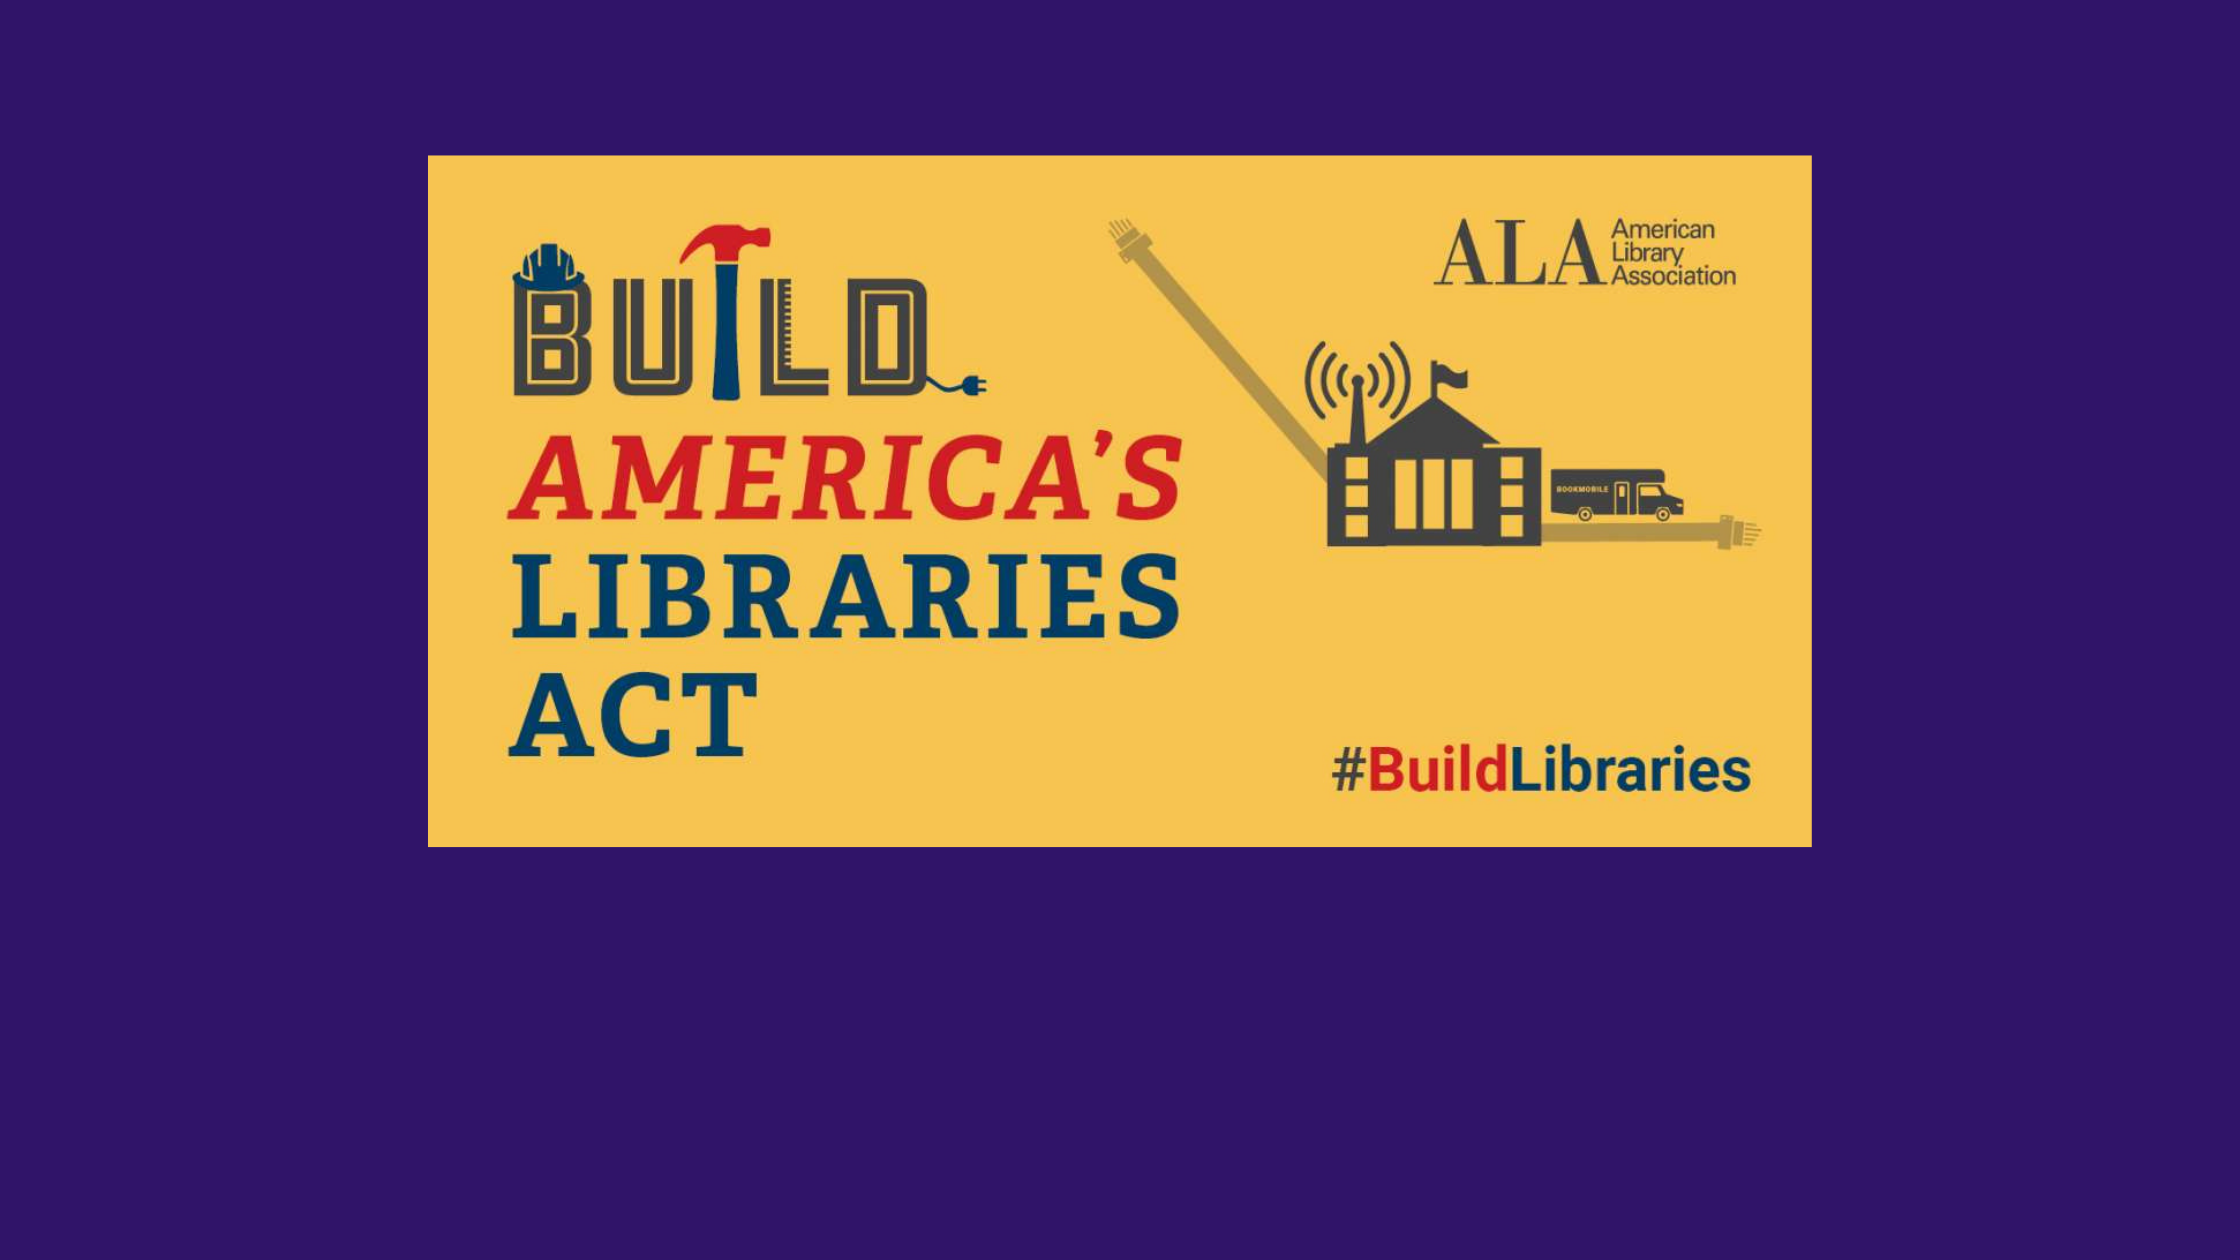 Build America's Libraires Act logo and ALA logo